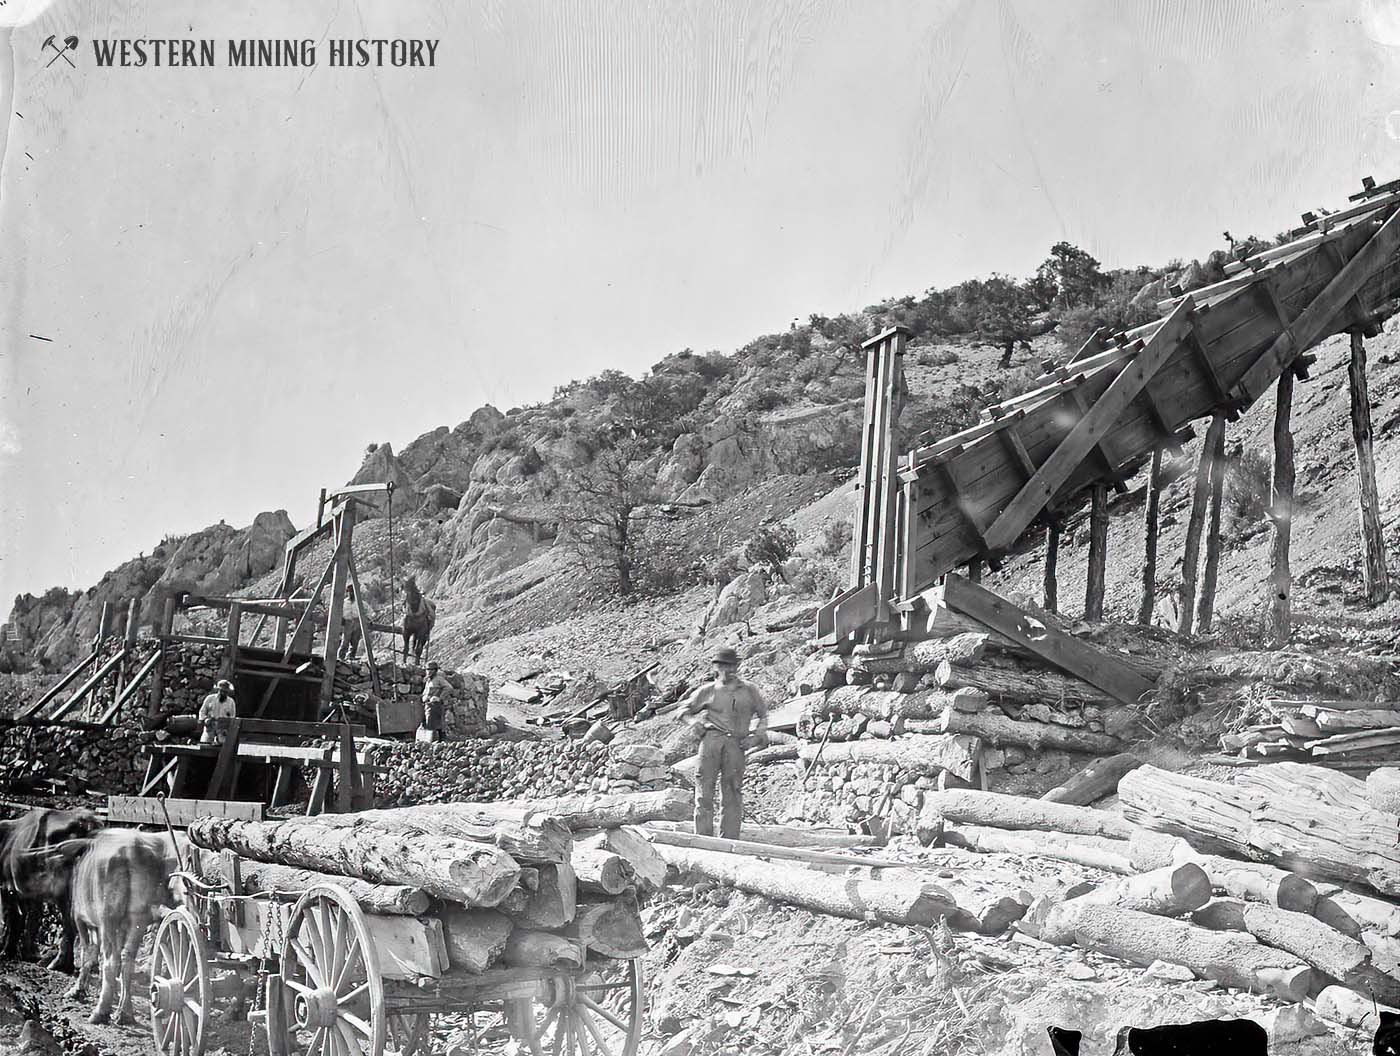 Ore chute at Eureka, Nevada 1871